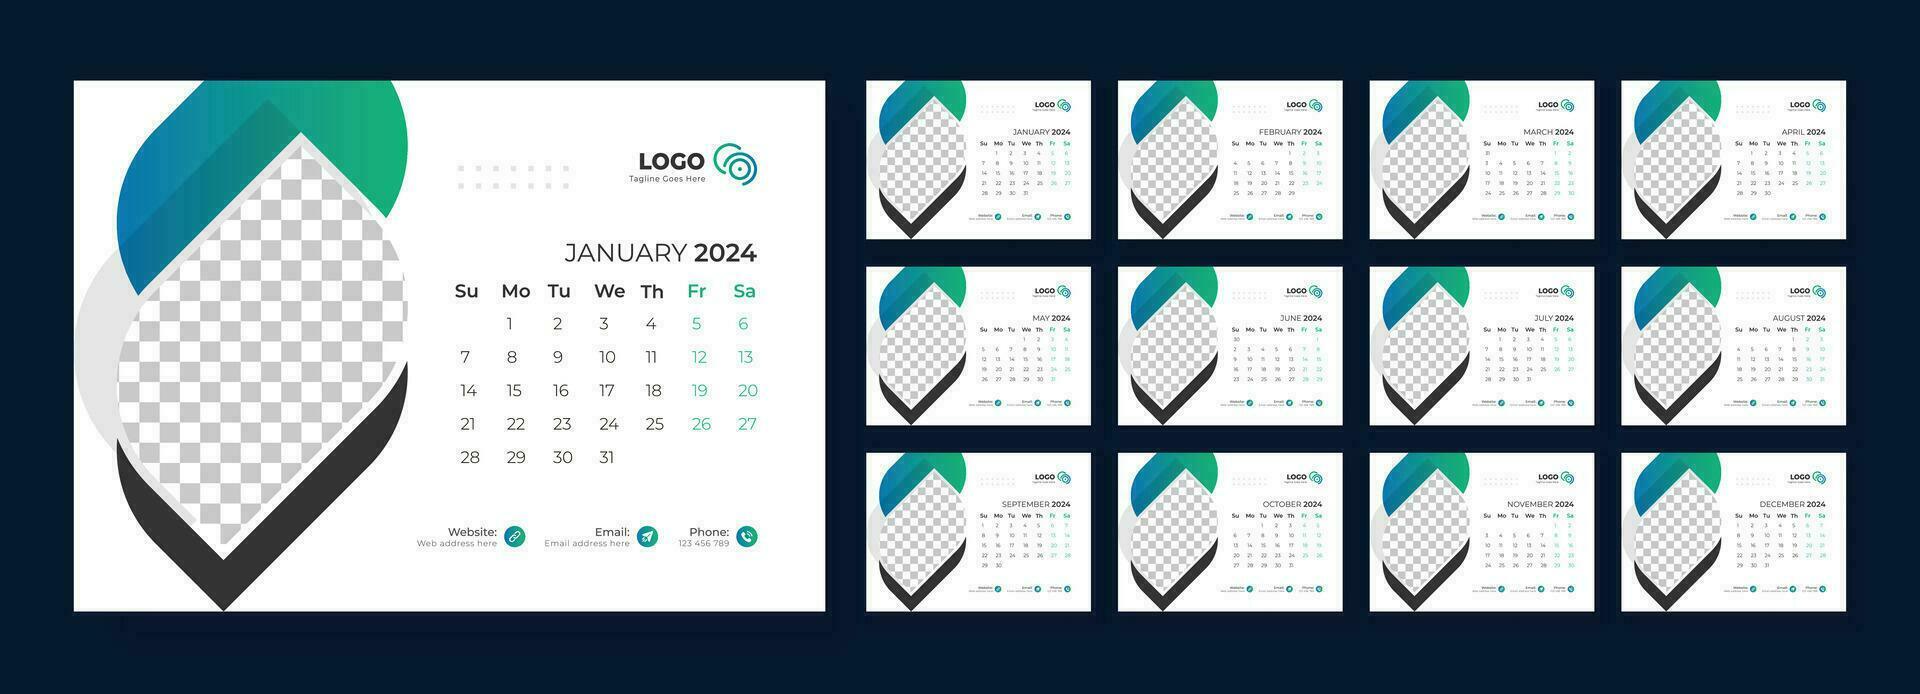 Desk Calendar 2024 template design, Office Calendar 2024, Week starts on Sunday vector